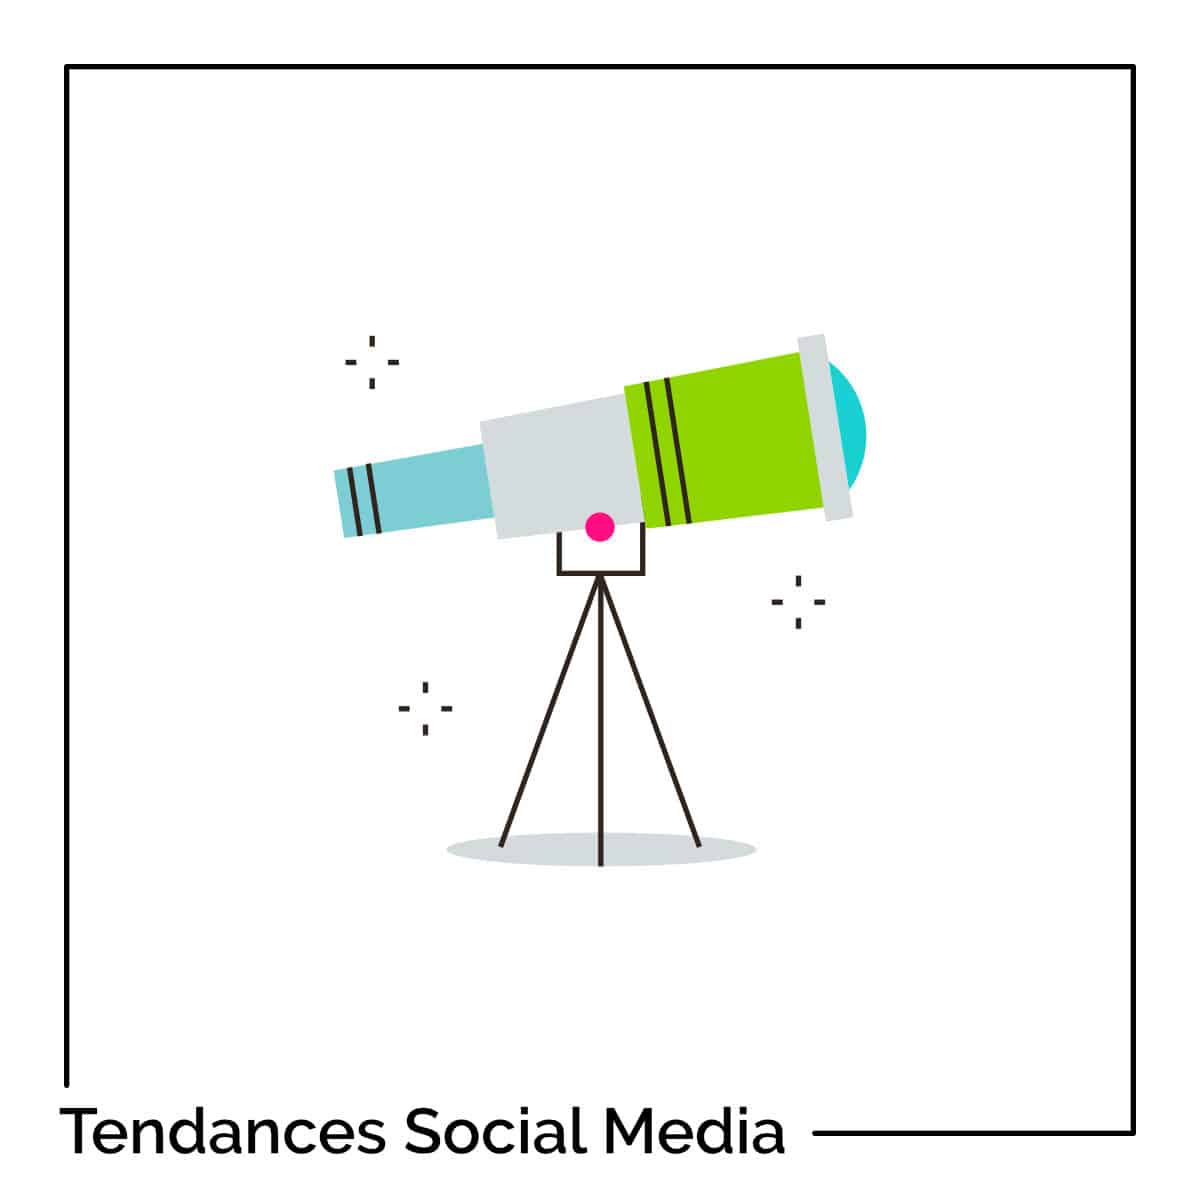 Tendances social media 2020